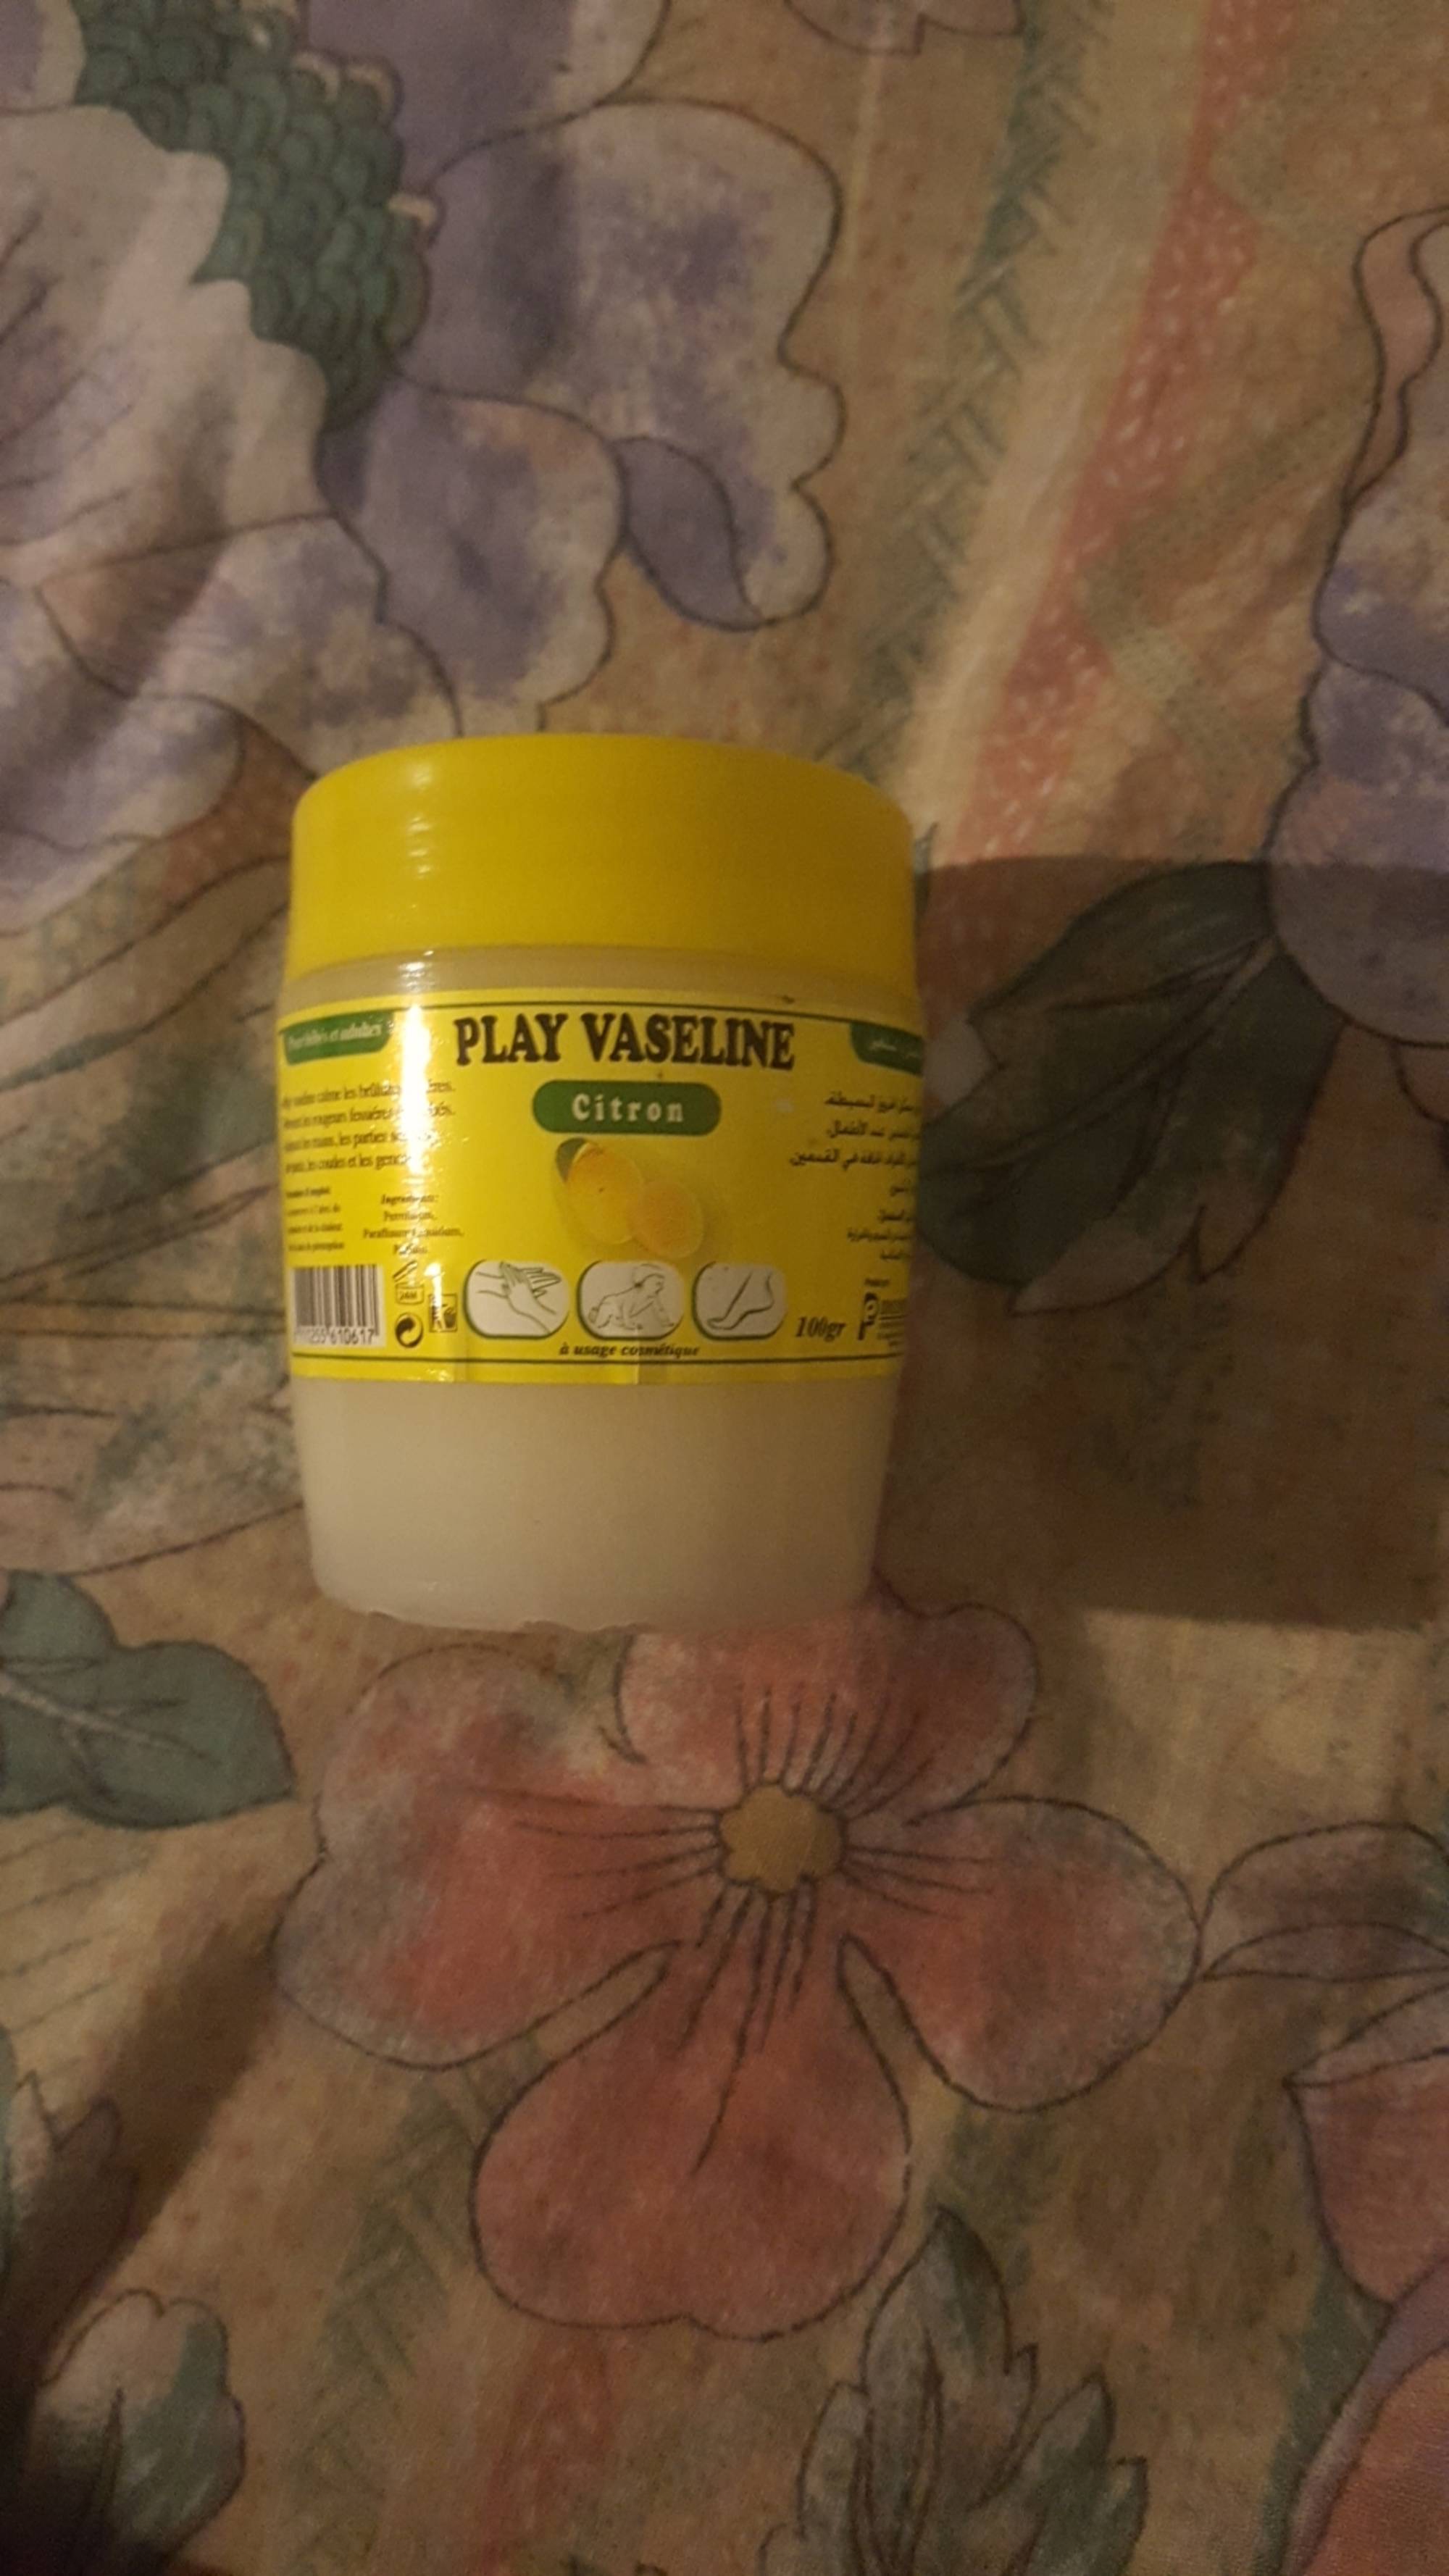 VASELINE - Play vaseline citron